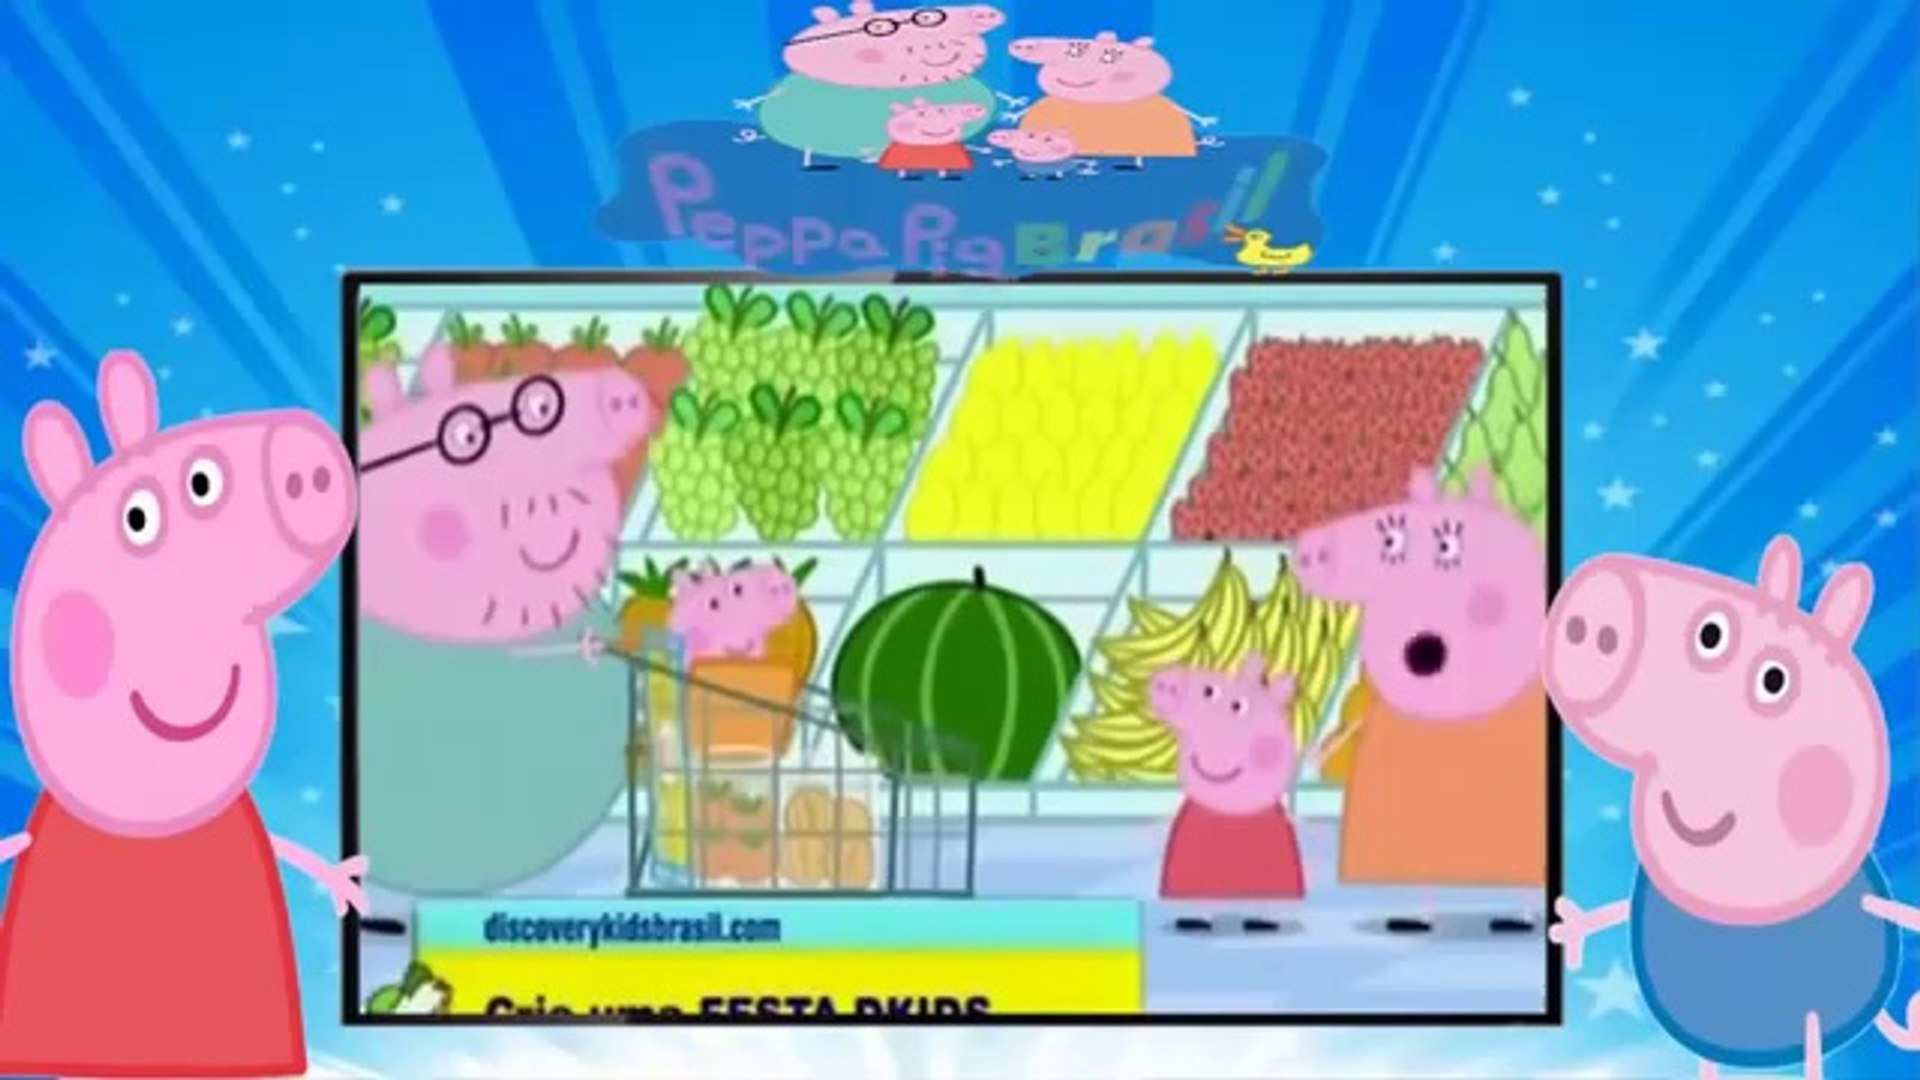 Peppa Pig Português Brasil, Compilation 14, HD